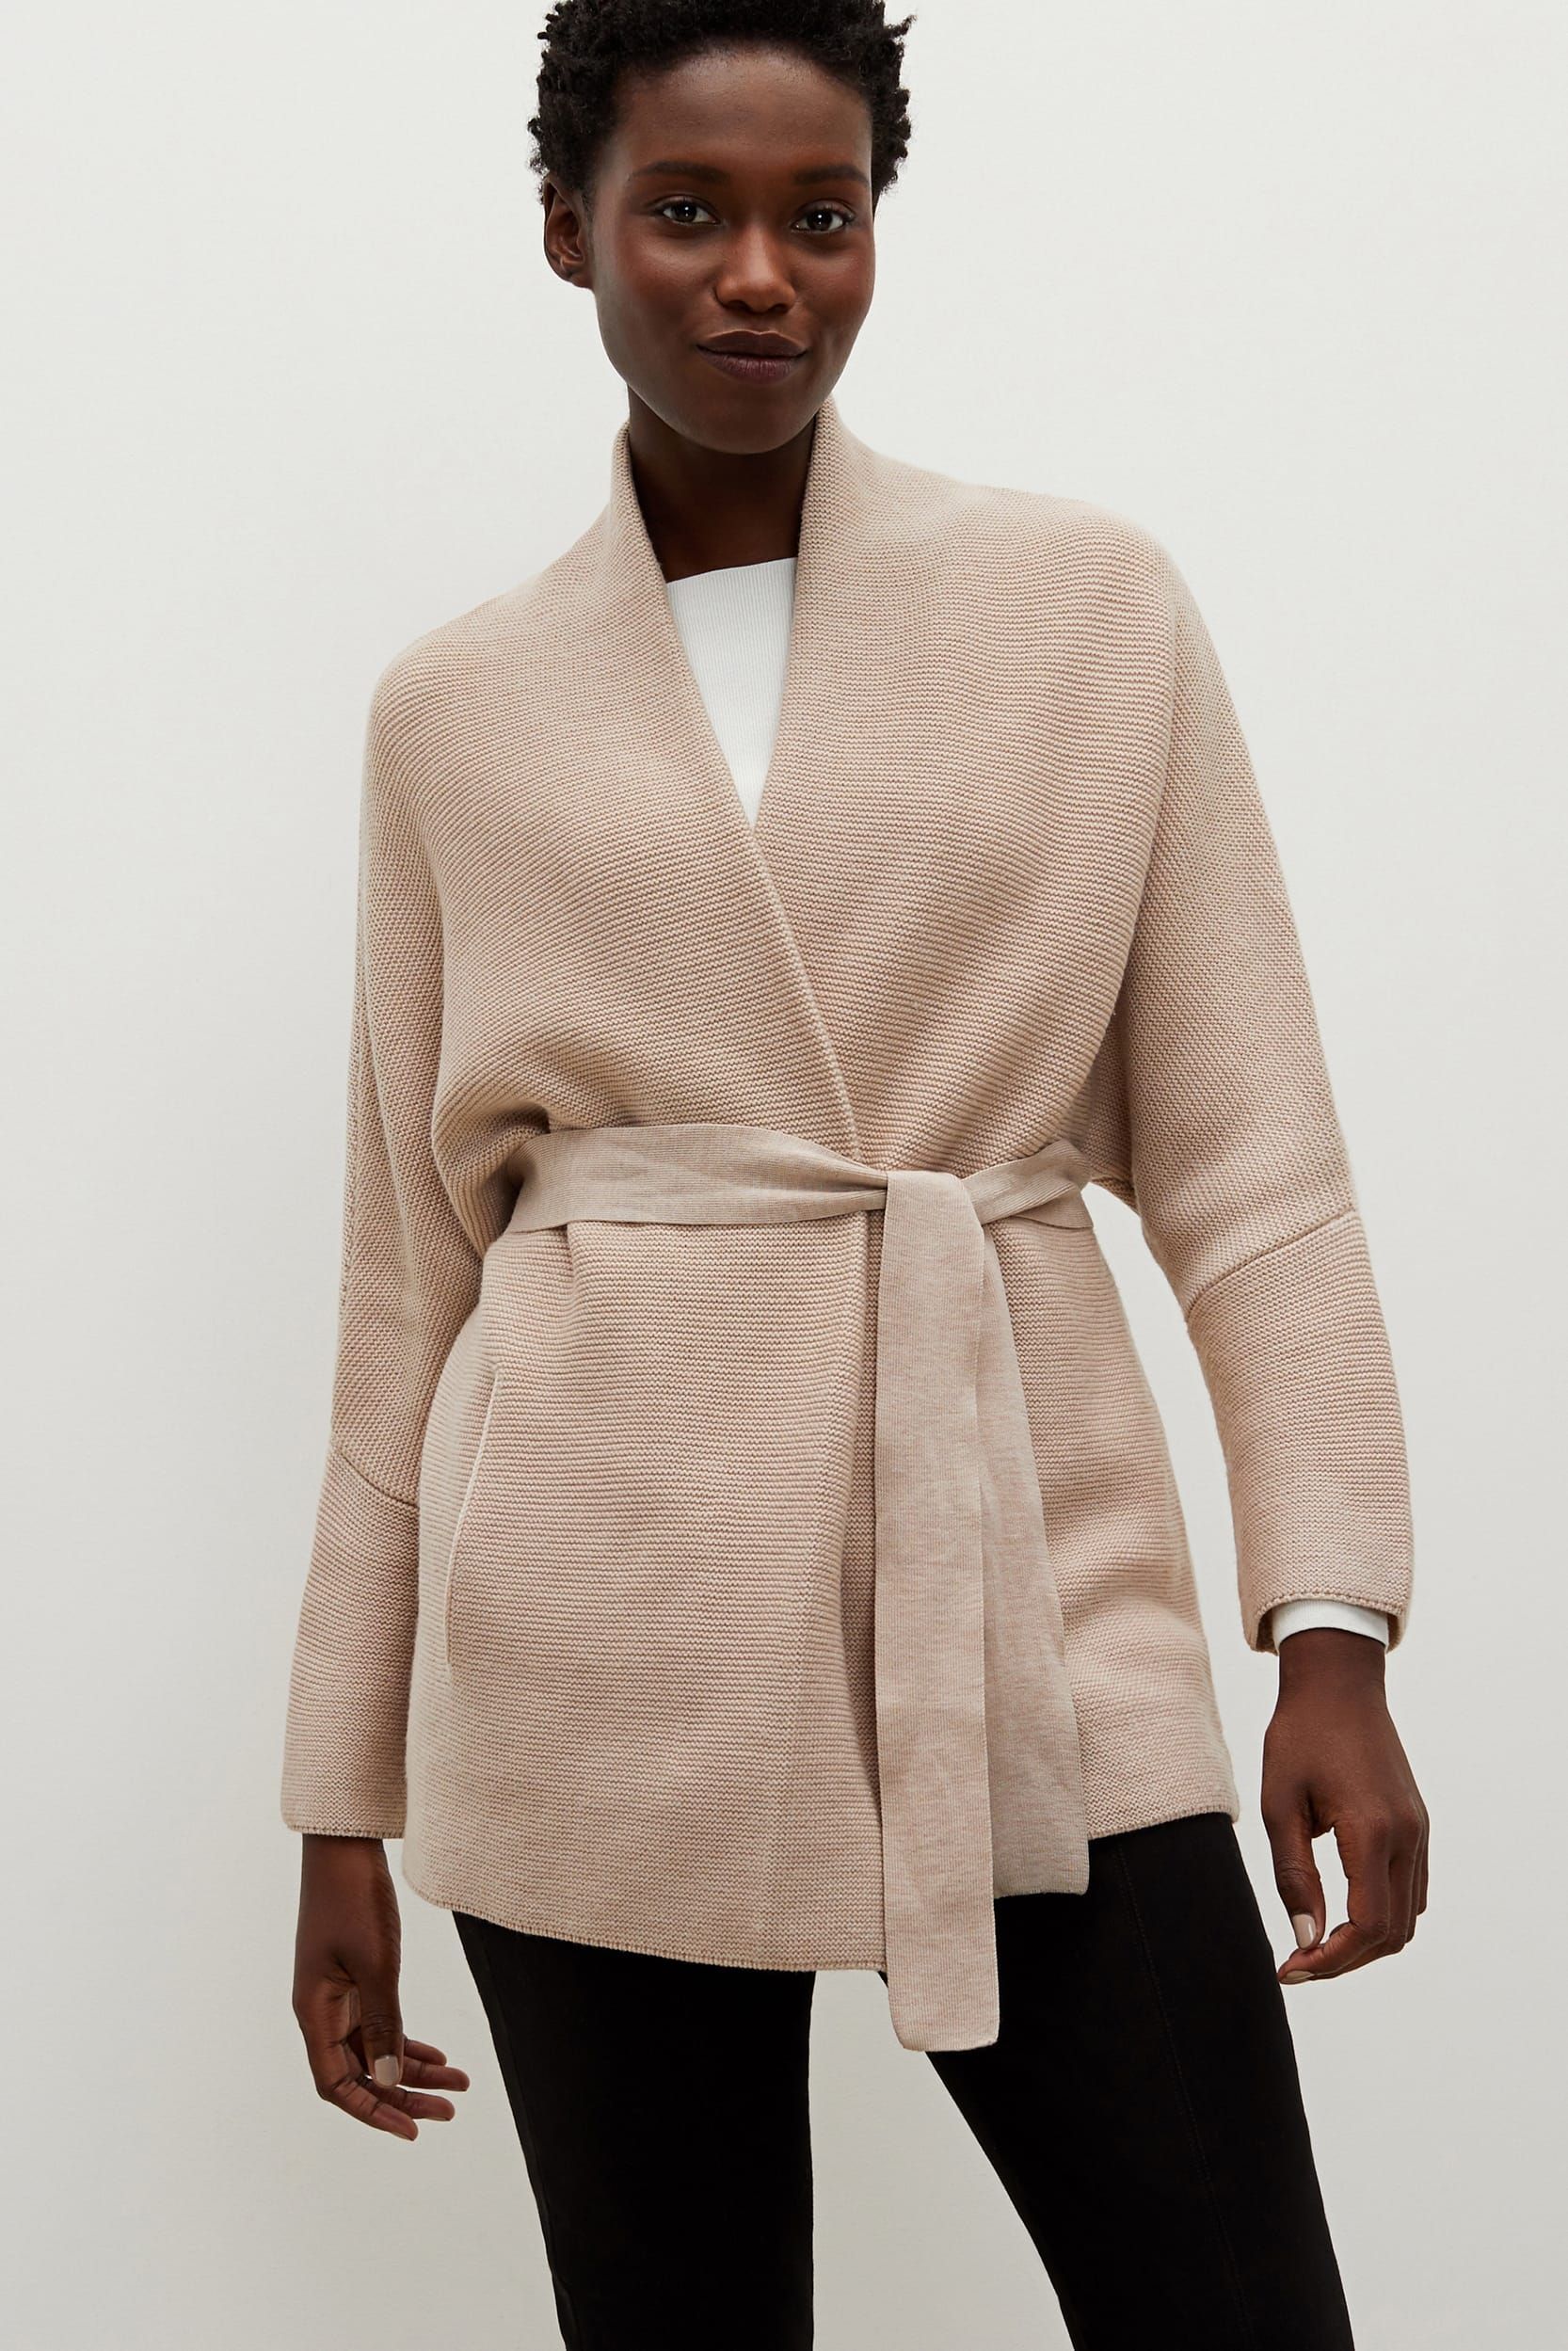 The Morandi Sweater—Merino Wool | MM LaFleur